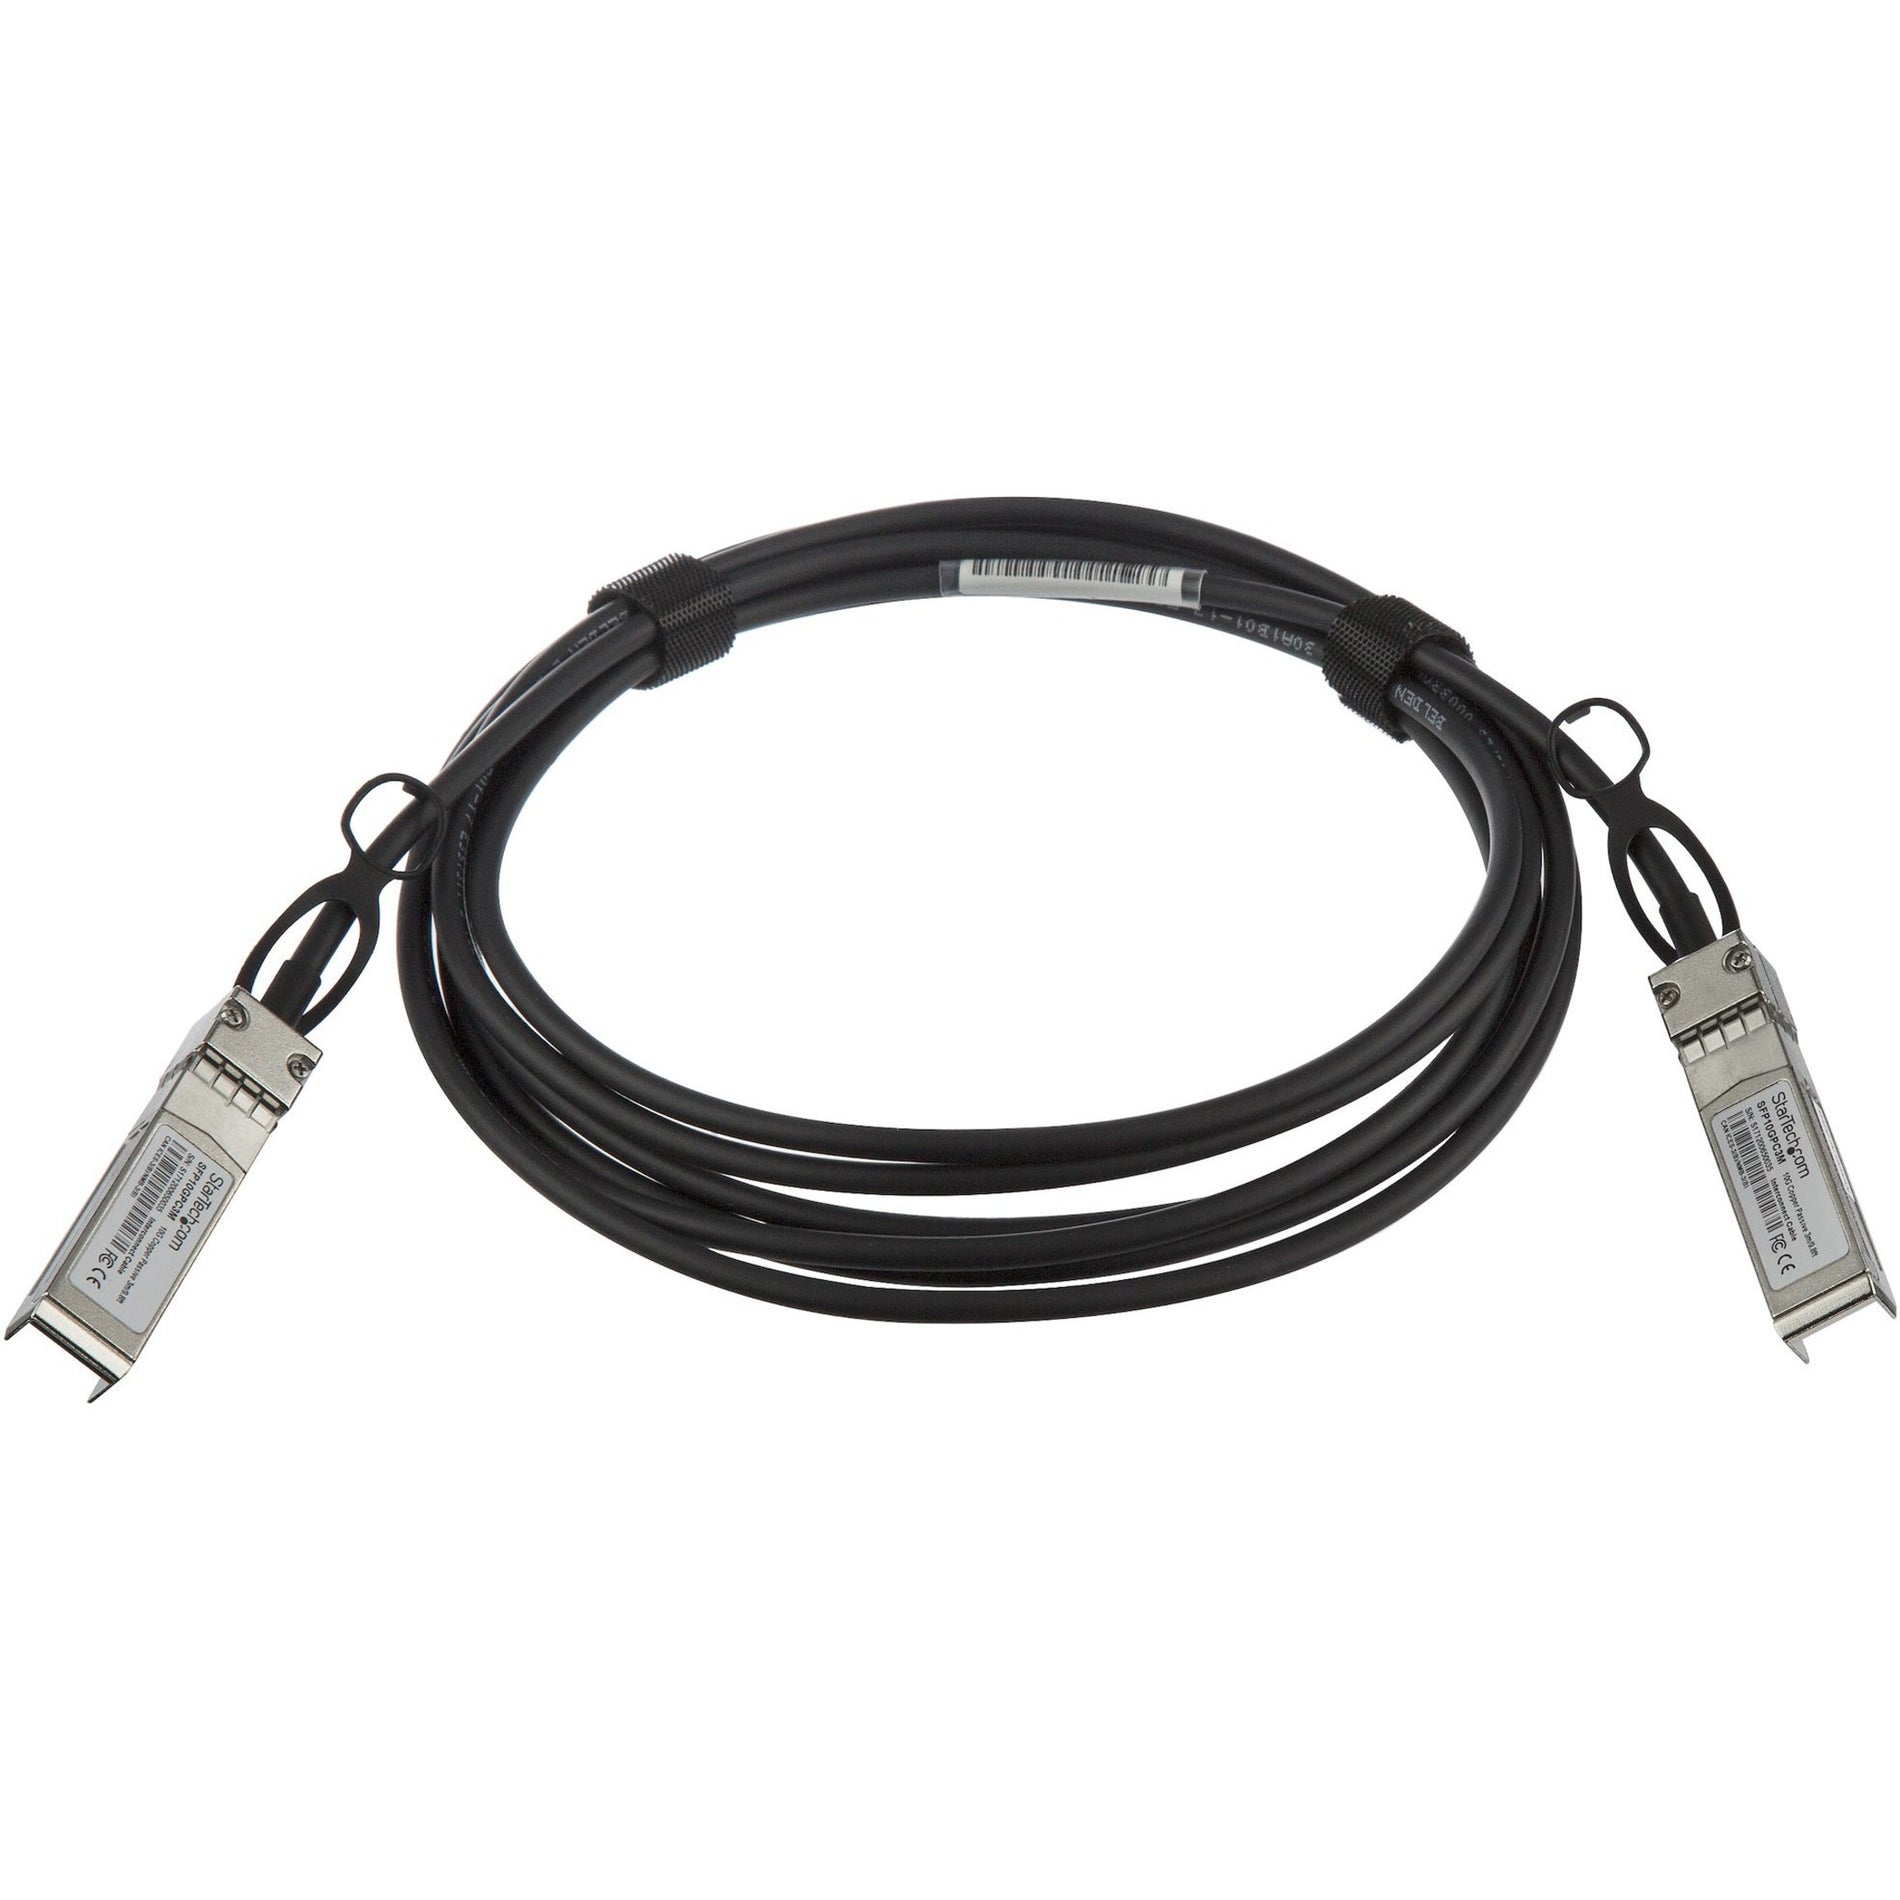 StarTech.com SFP10GPC3M SFP+ Direct Attach Cable - MSA Compliant - 3 m (9.8 ft.), Hot-swappable, Passive, 10 Gbit/s